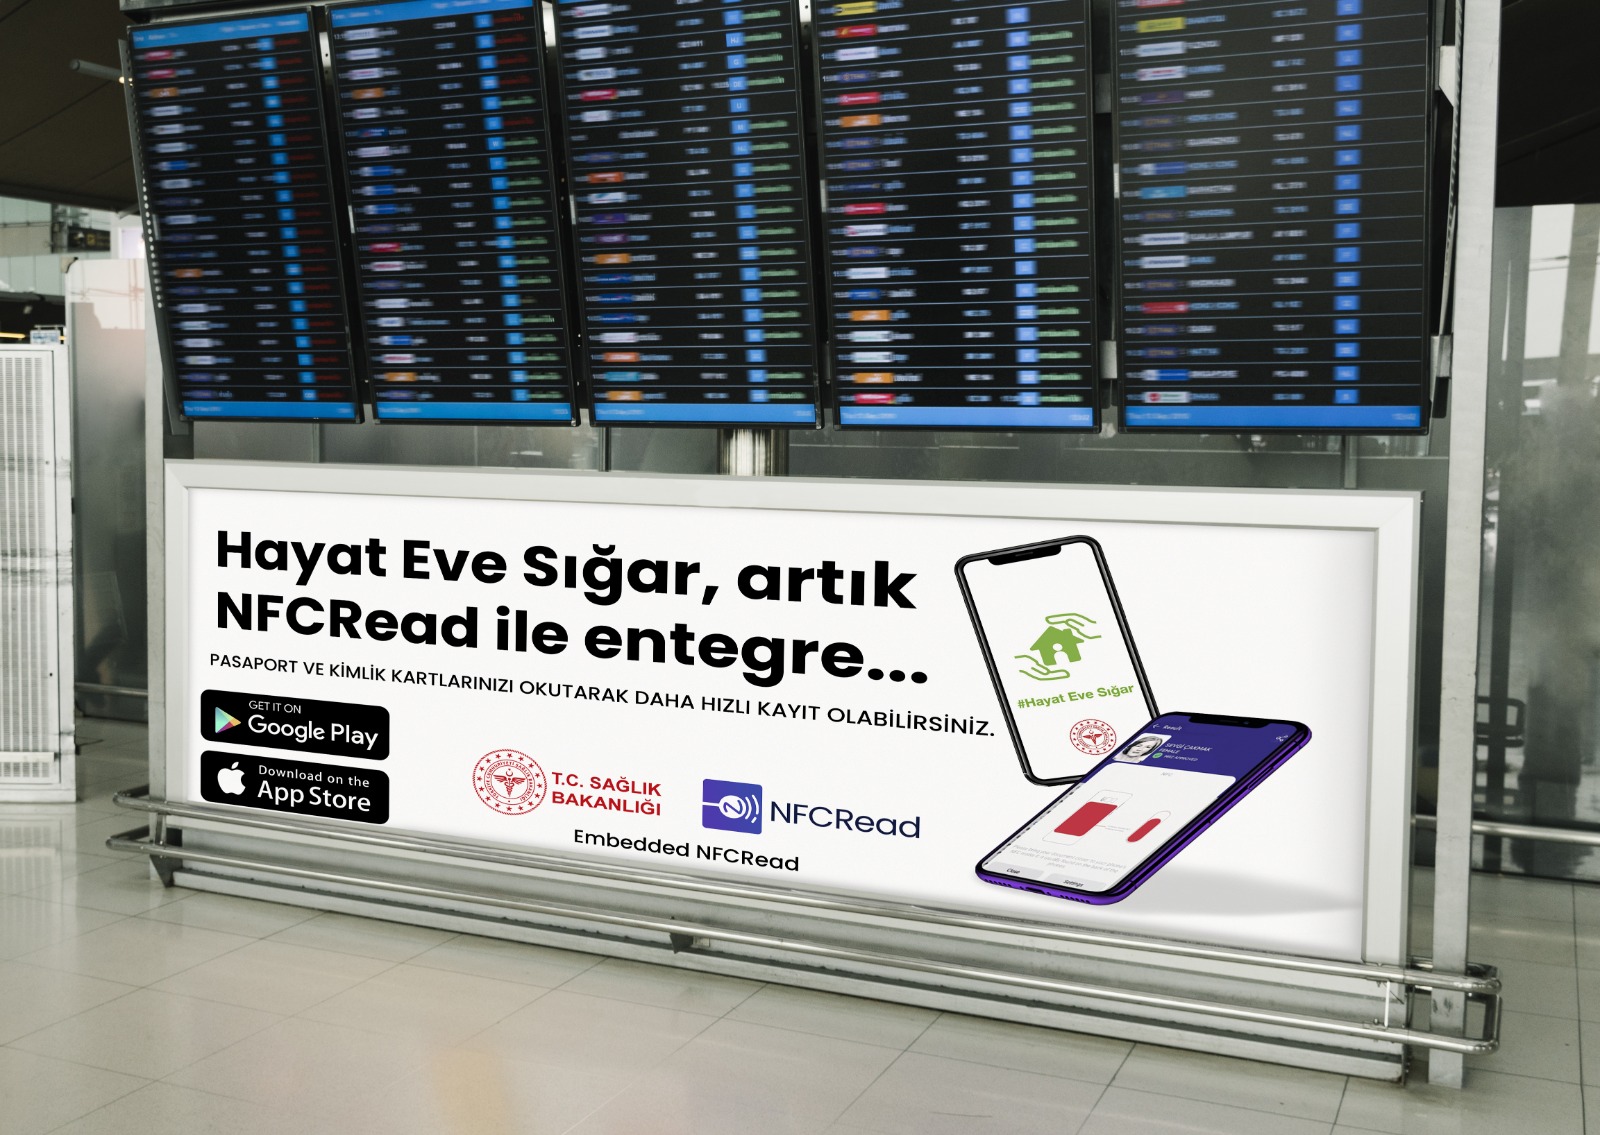 We offer a solution to Hayat Eve Sığar - HES Mobile Application.